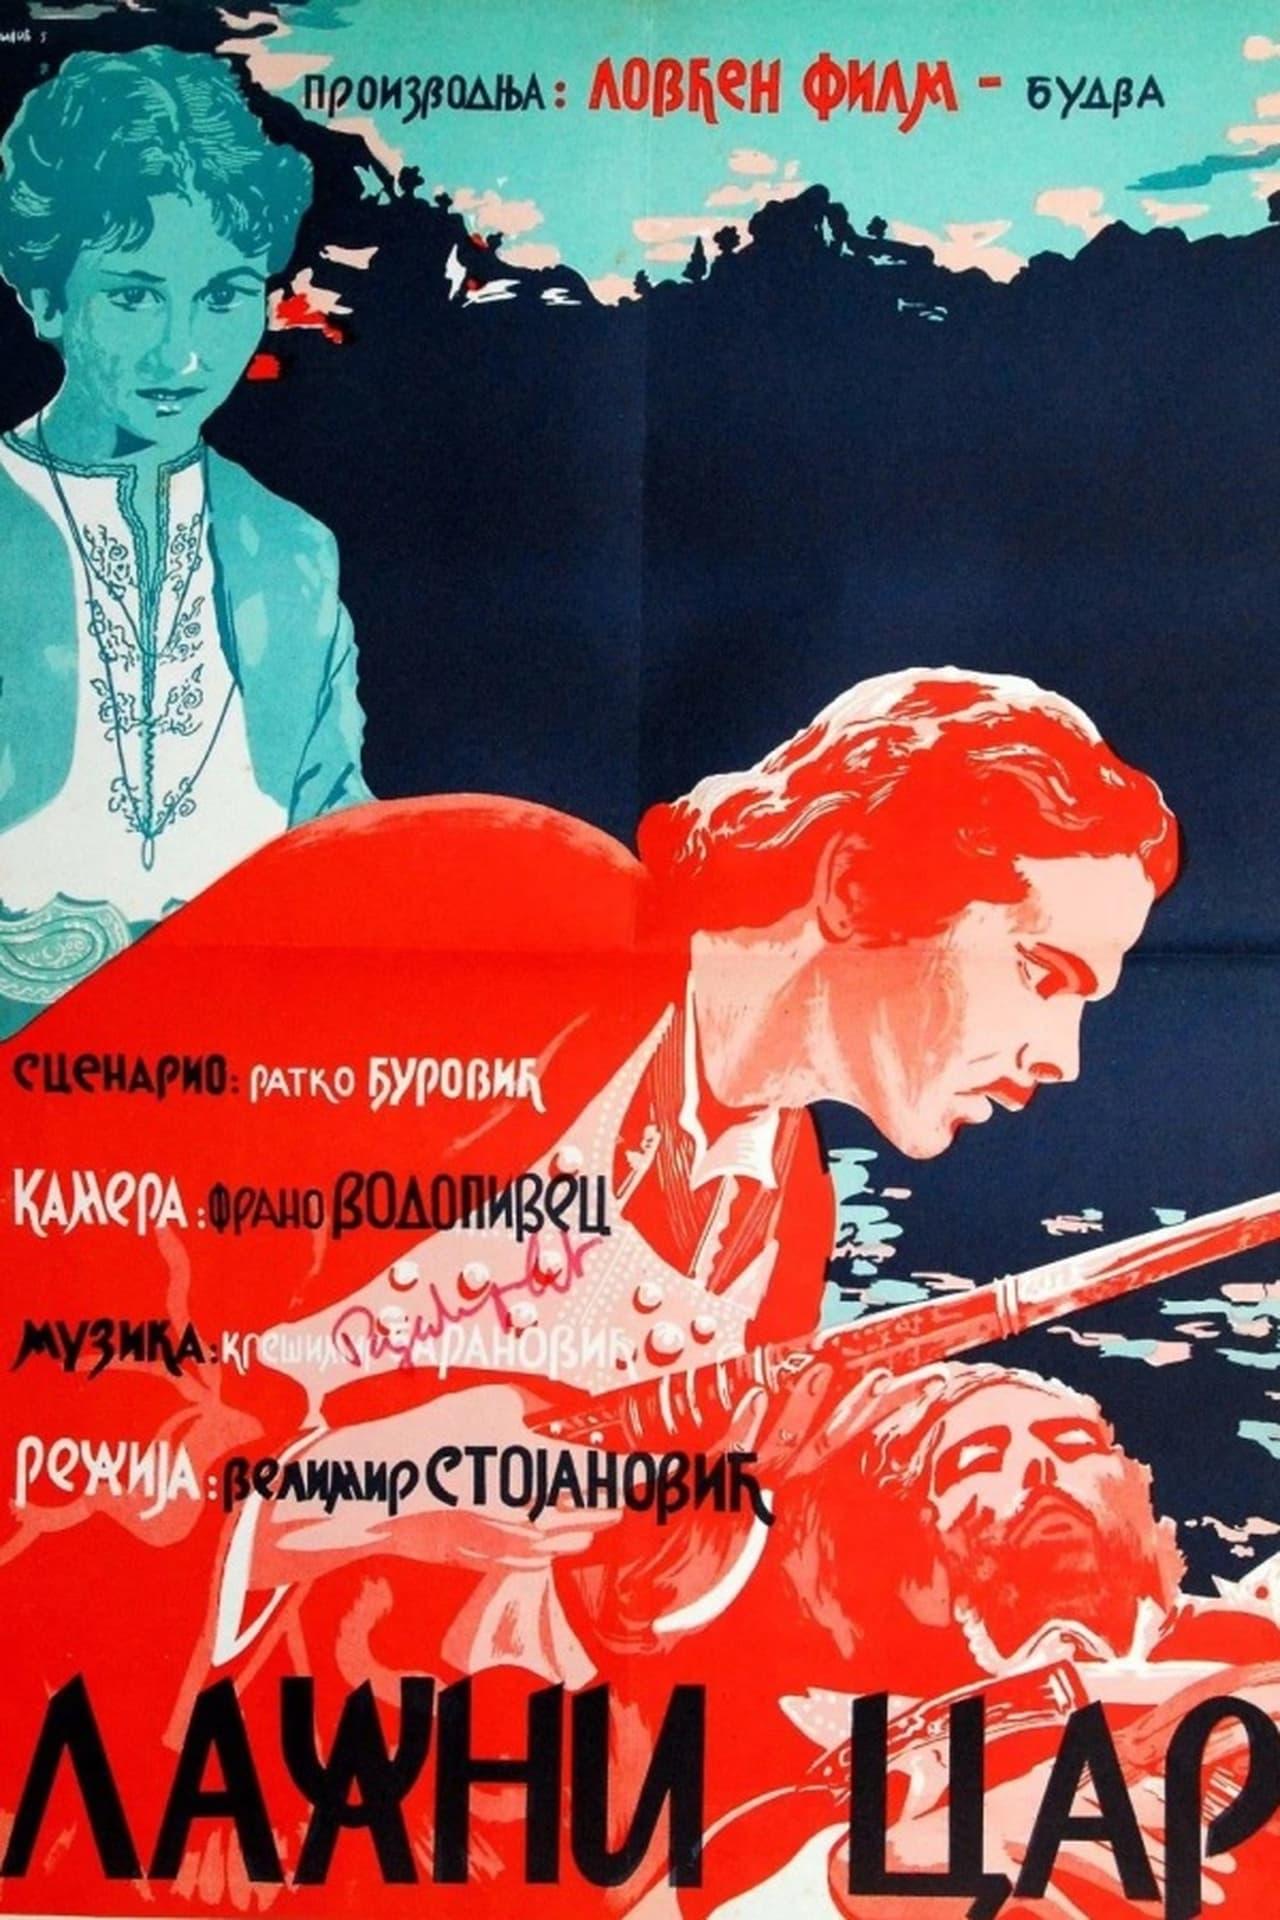 The False Tsar poster